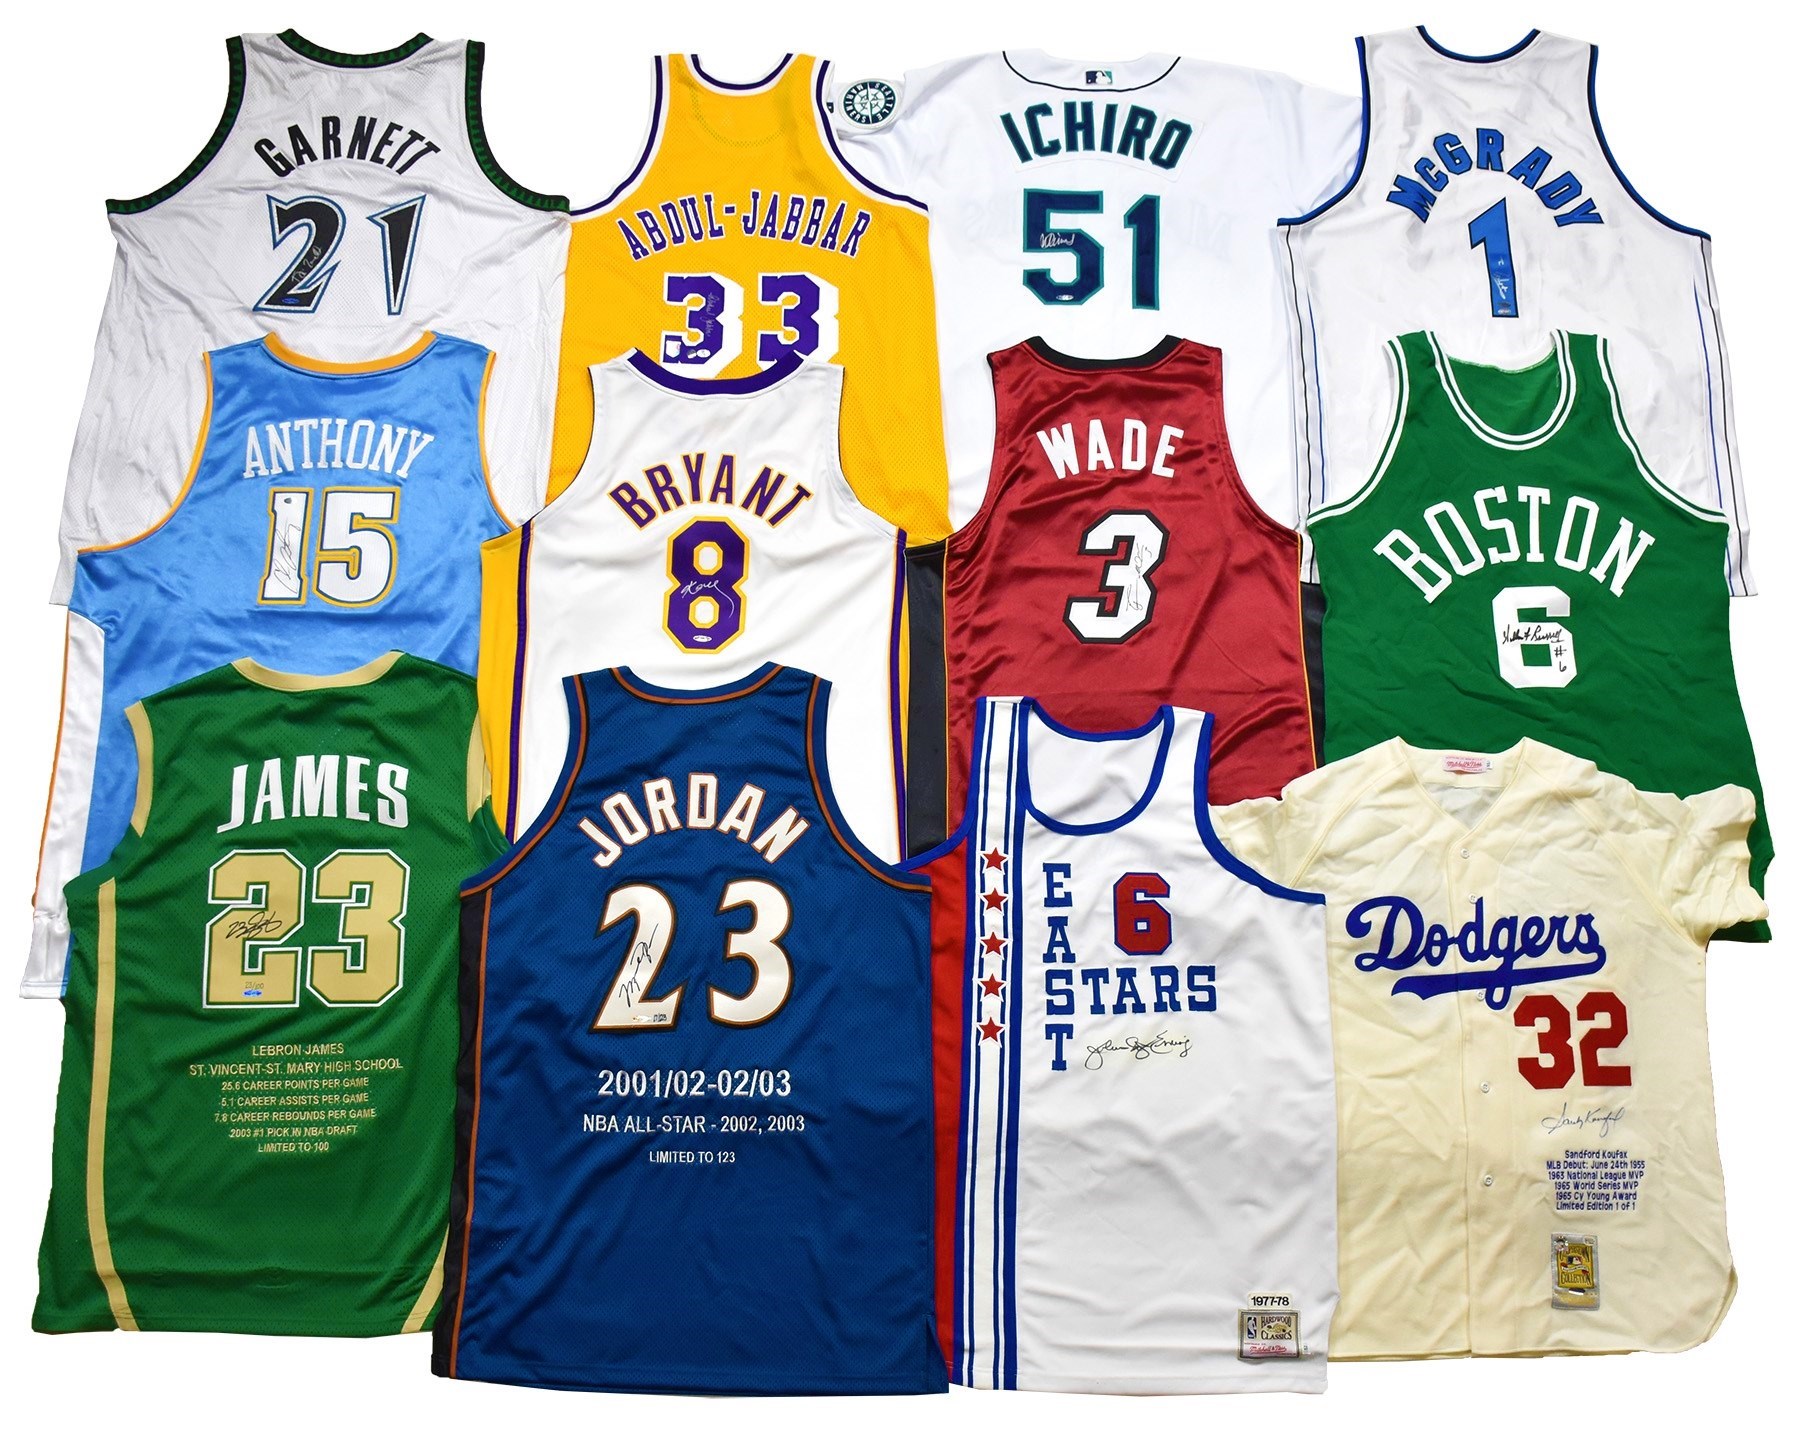 Major Sport Legends Signed Jersey Collection with LeBron, Kobe & Jordan (35+)